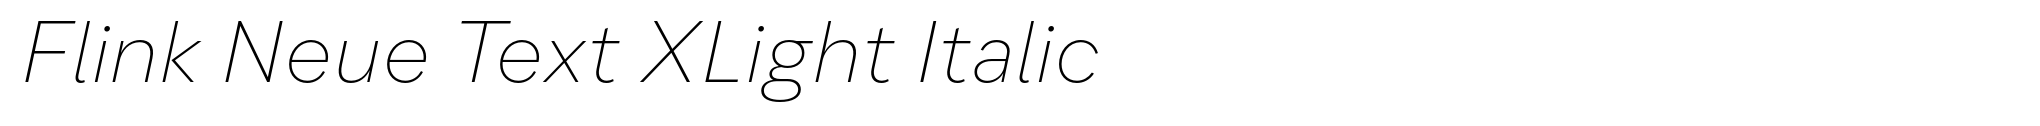 Flink Neue Text XLight Italic image